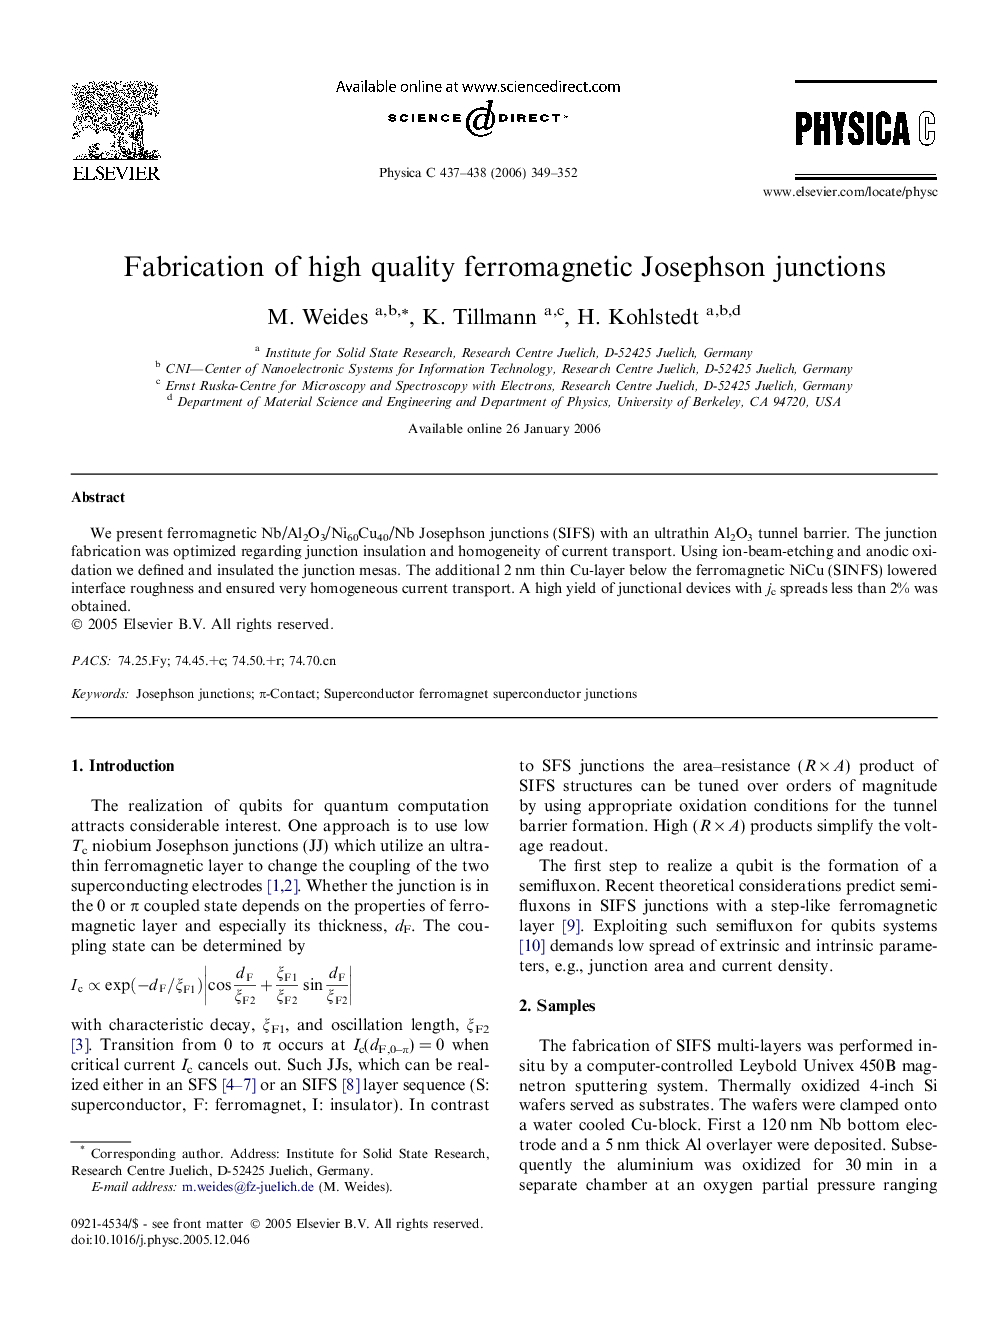 Fabrication of high quality ferromagnetic Josephson junctions